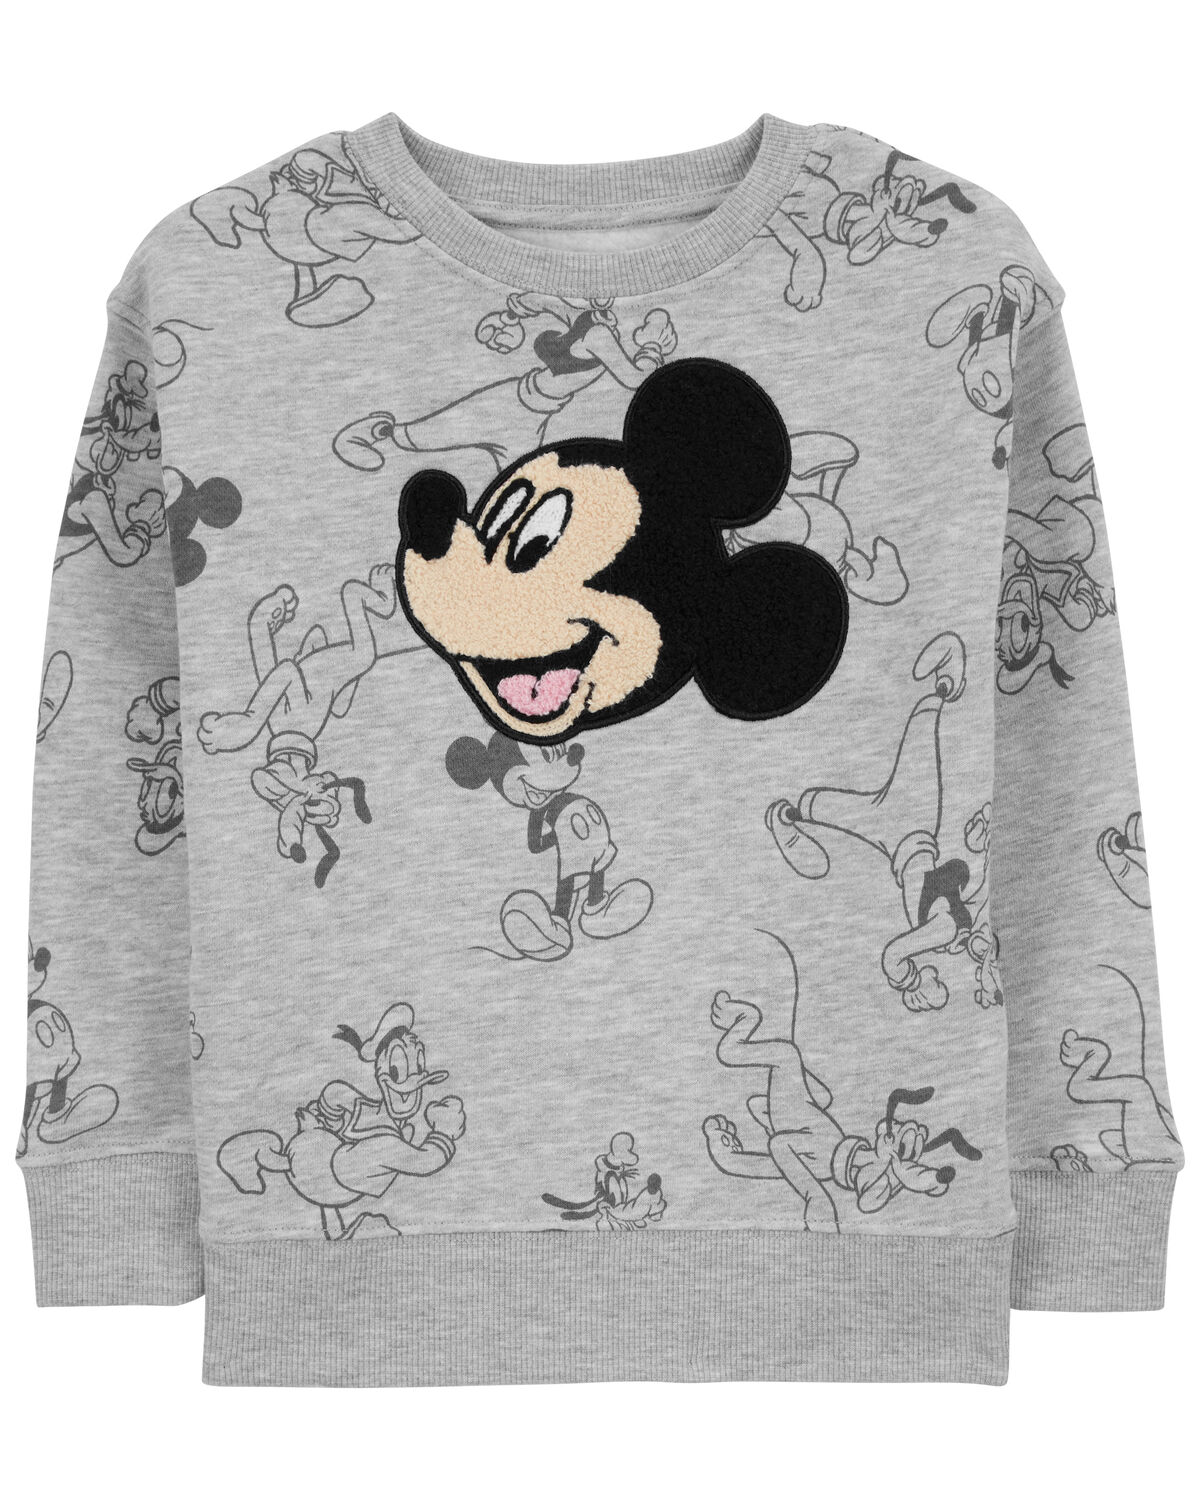 Grey Toddler Mickey Mouse Sweatshirt | carters.com